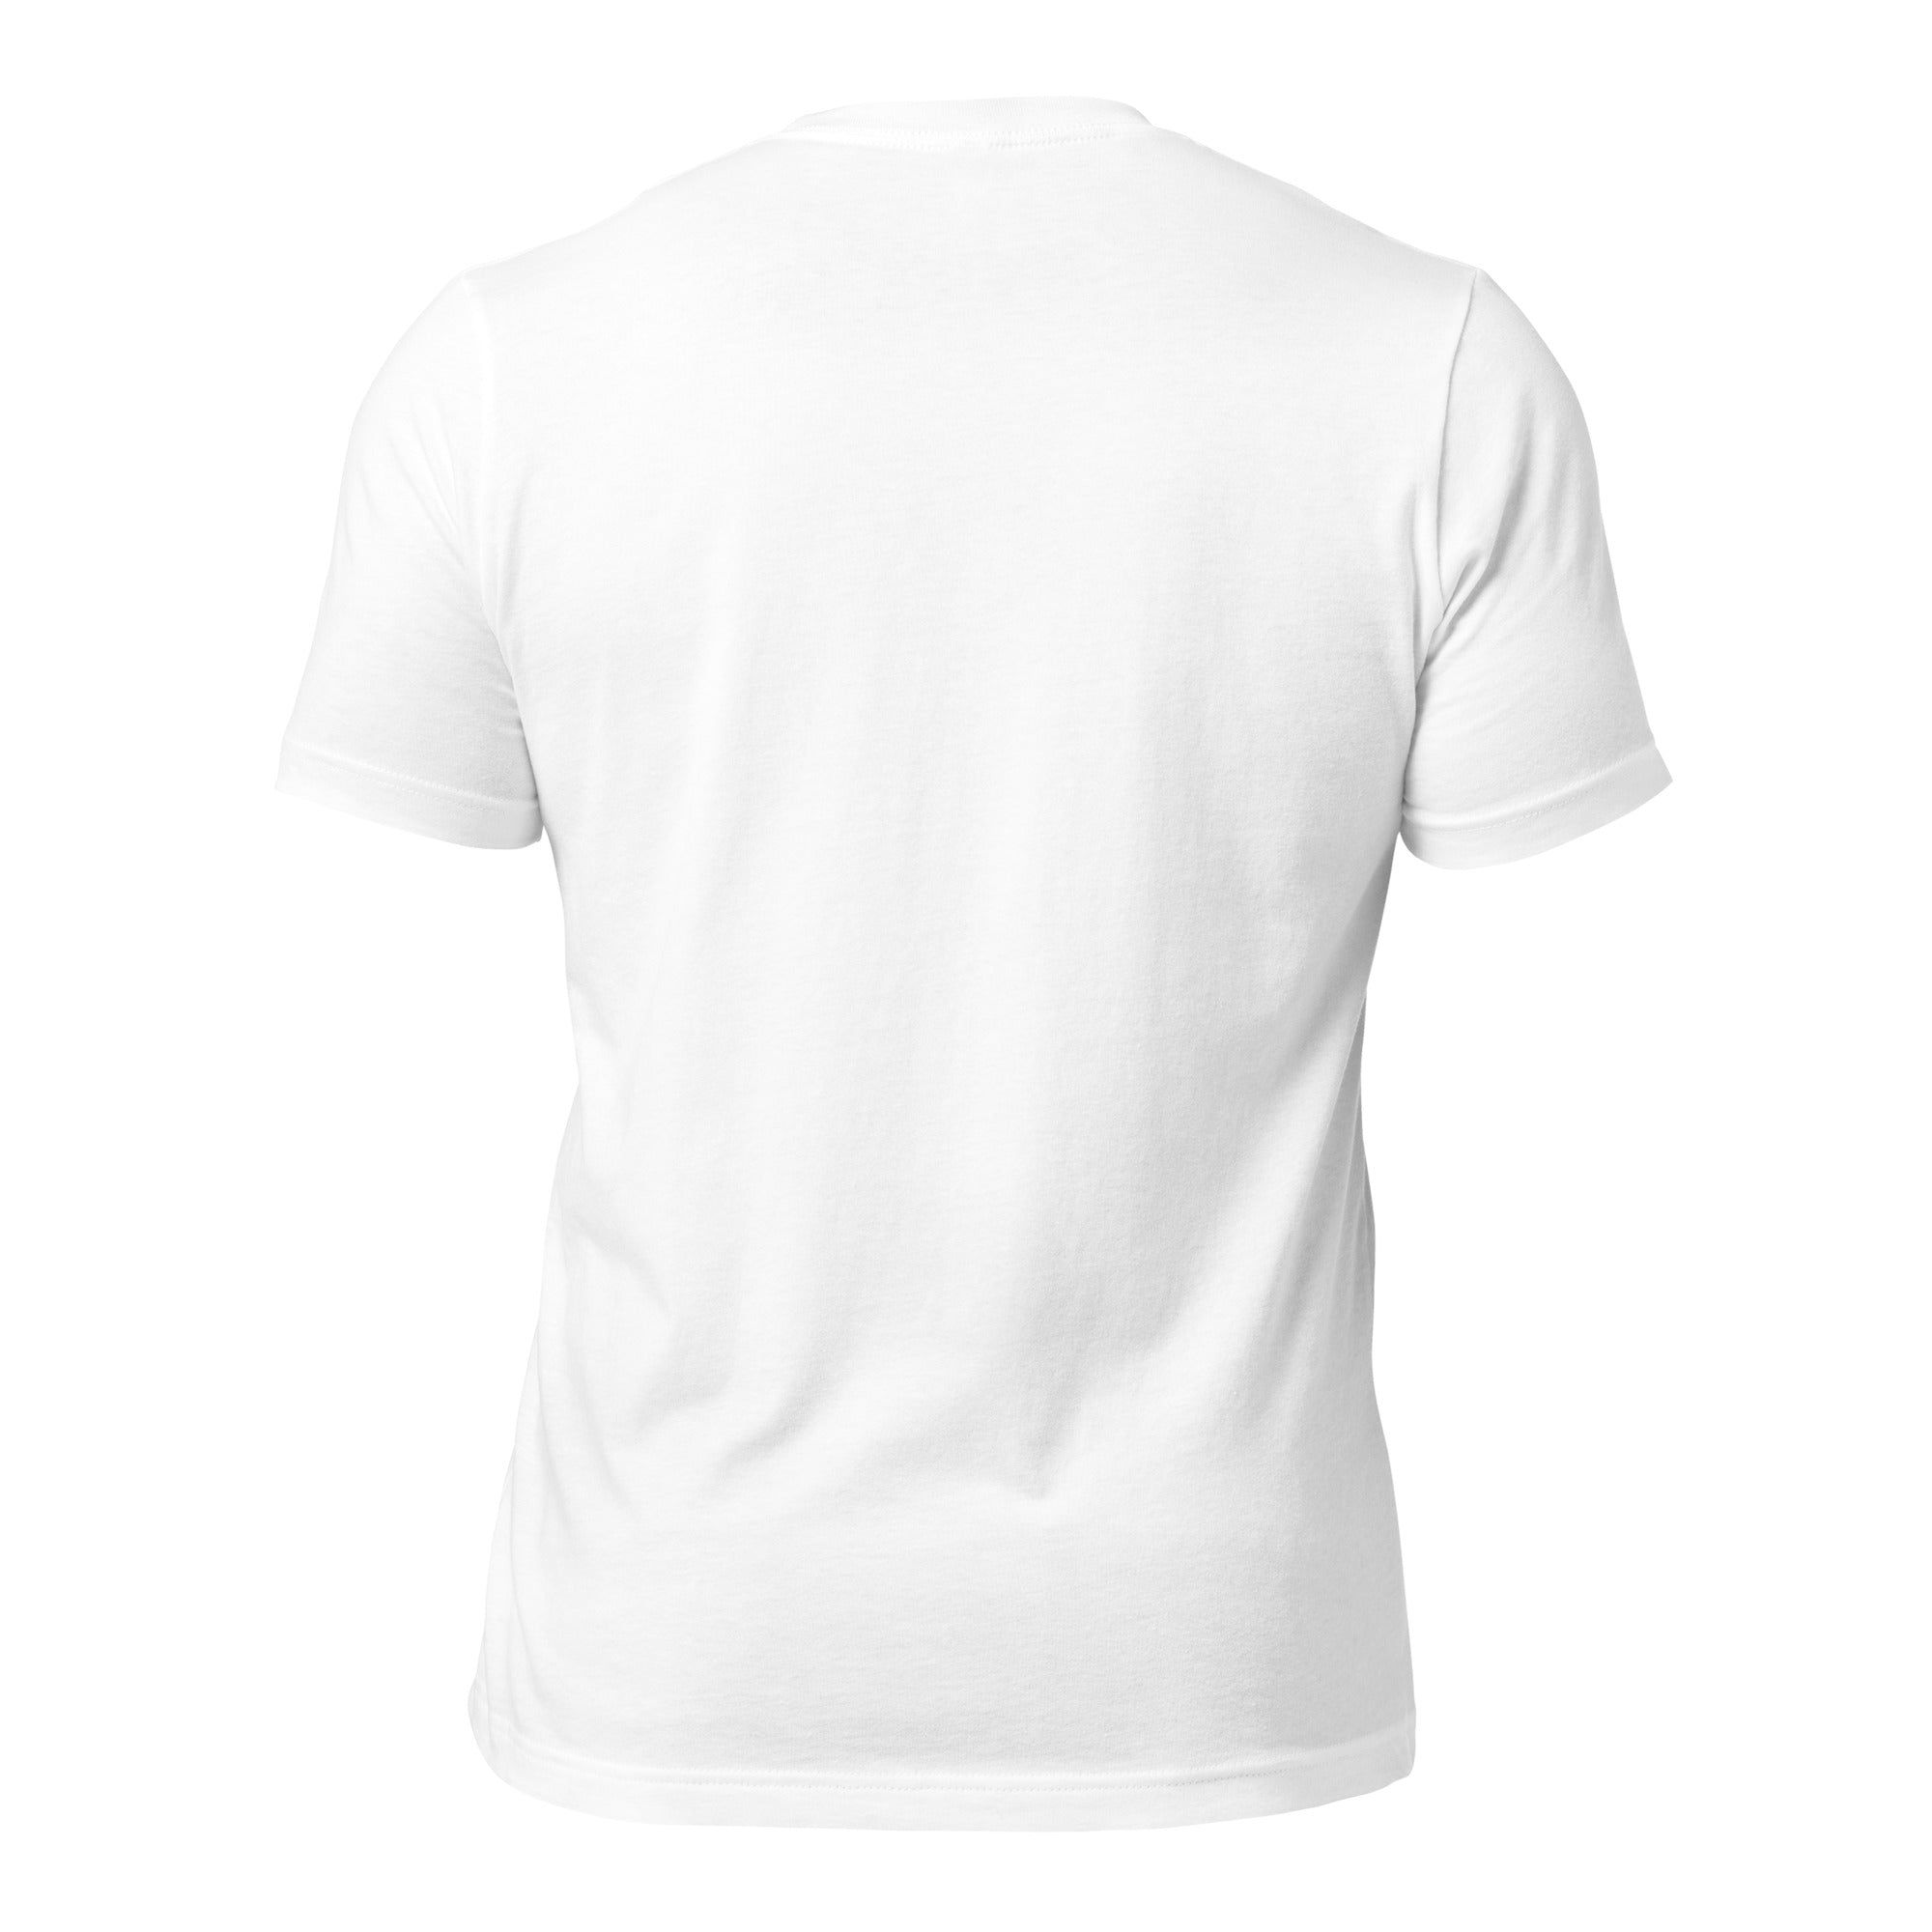 Brittany Spaniel - Short Sleeve Cotton Tee  Shirt